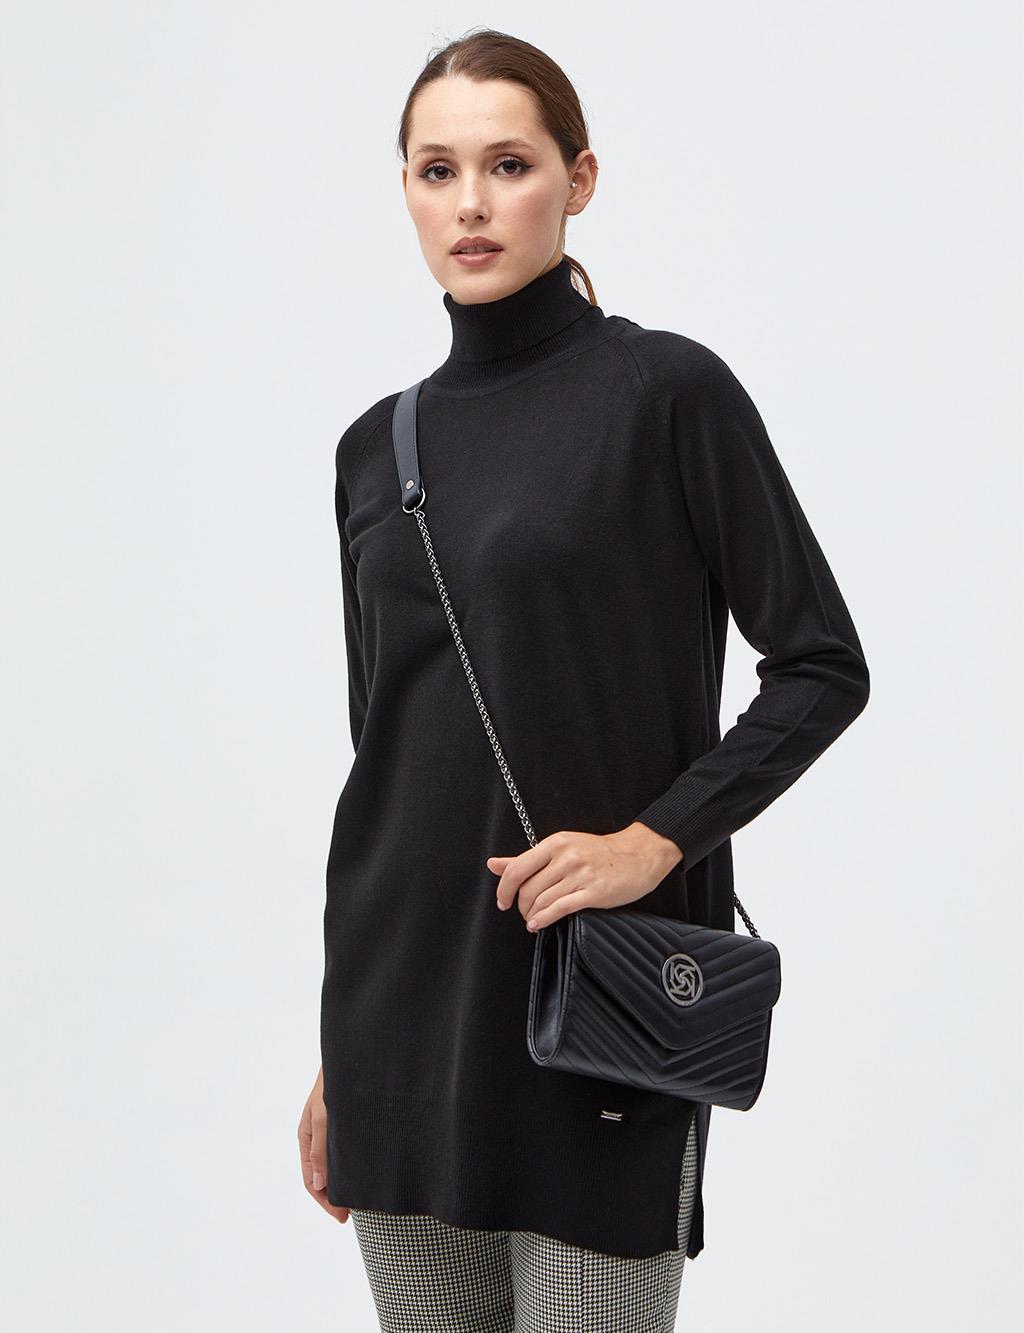 Turtleneck Knitwear Blouse Black